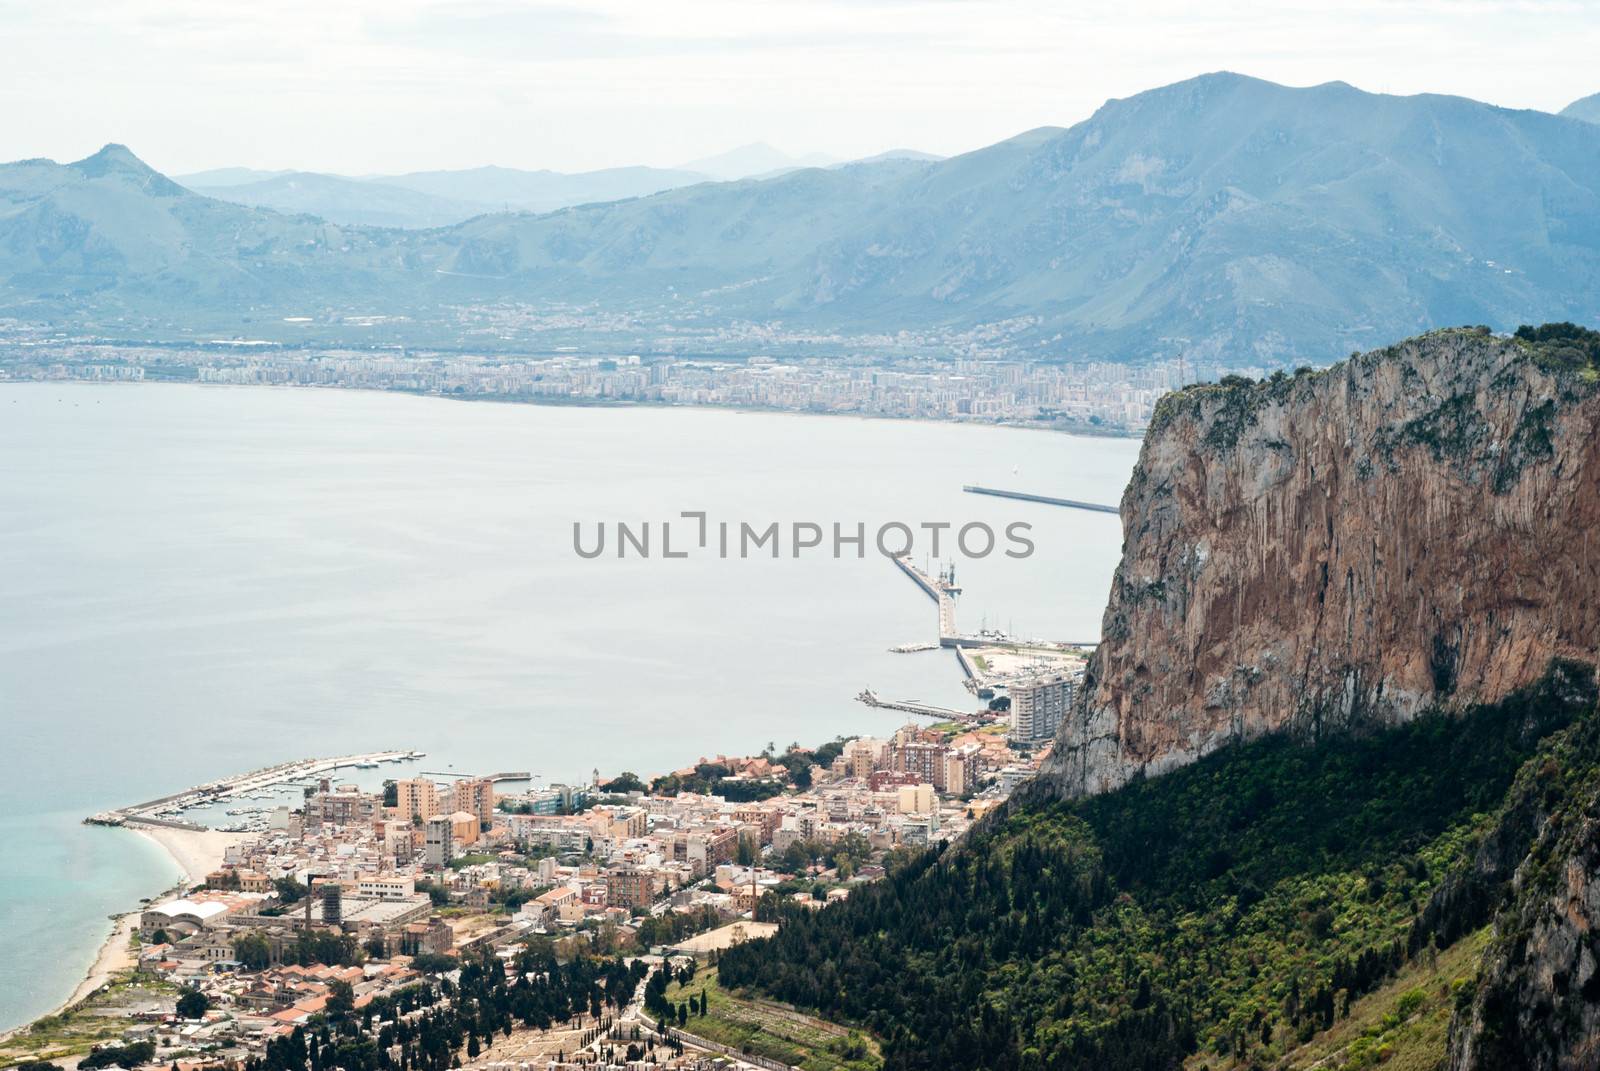 aeral view of Palermo by gandolfocannatella